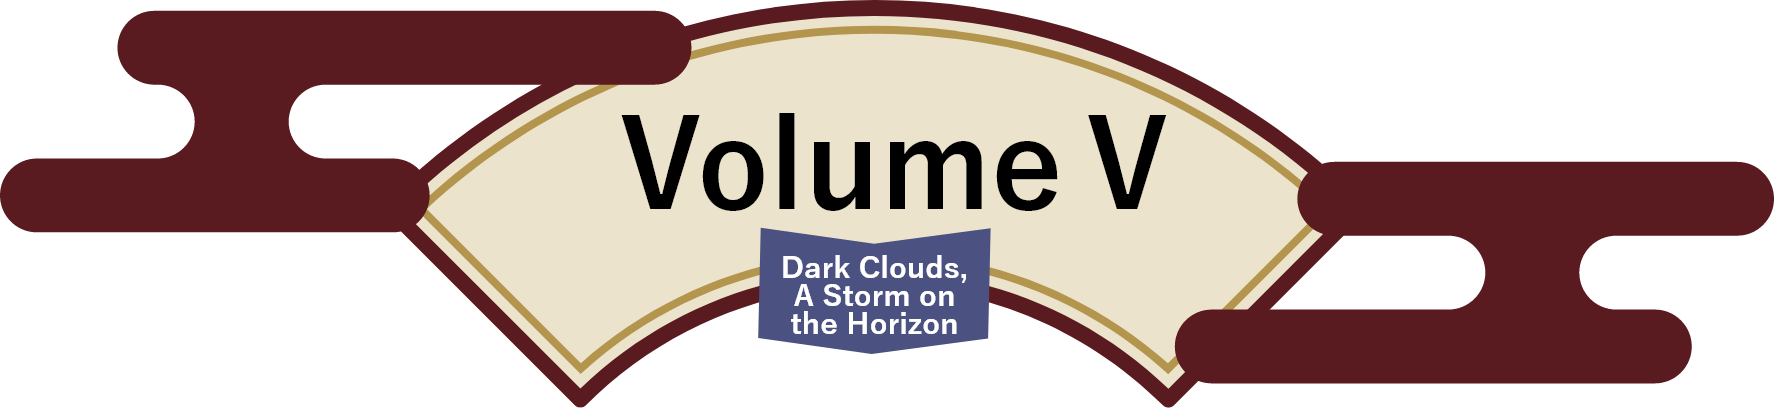 Volume Ⅴ Dark Clouds, A Storm on the Horizon